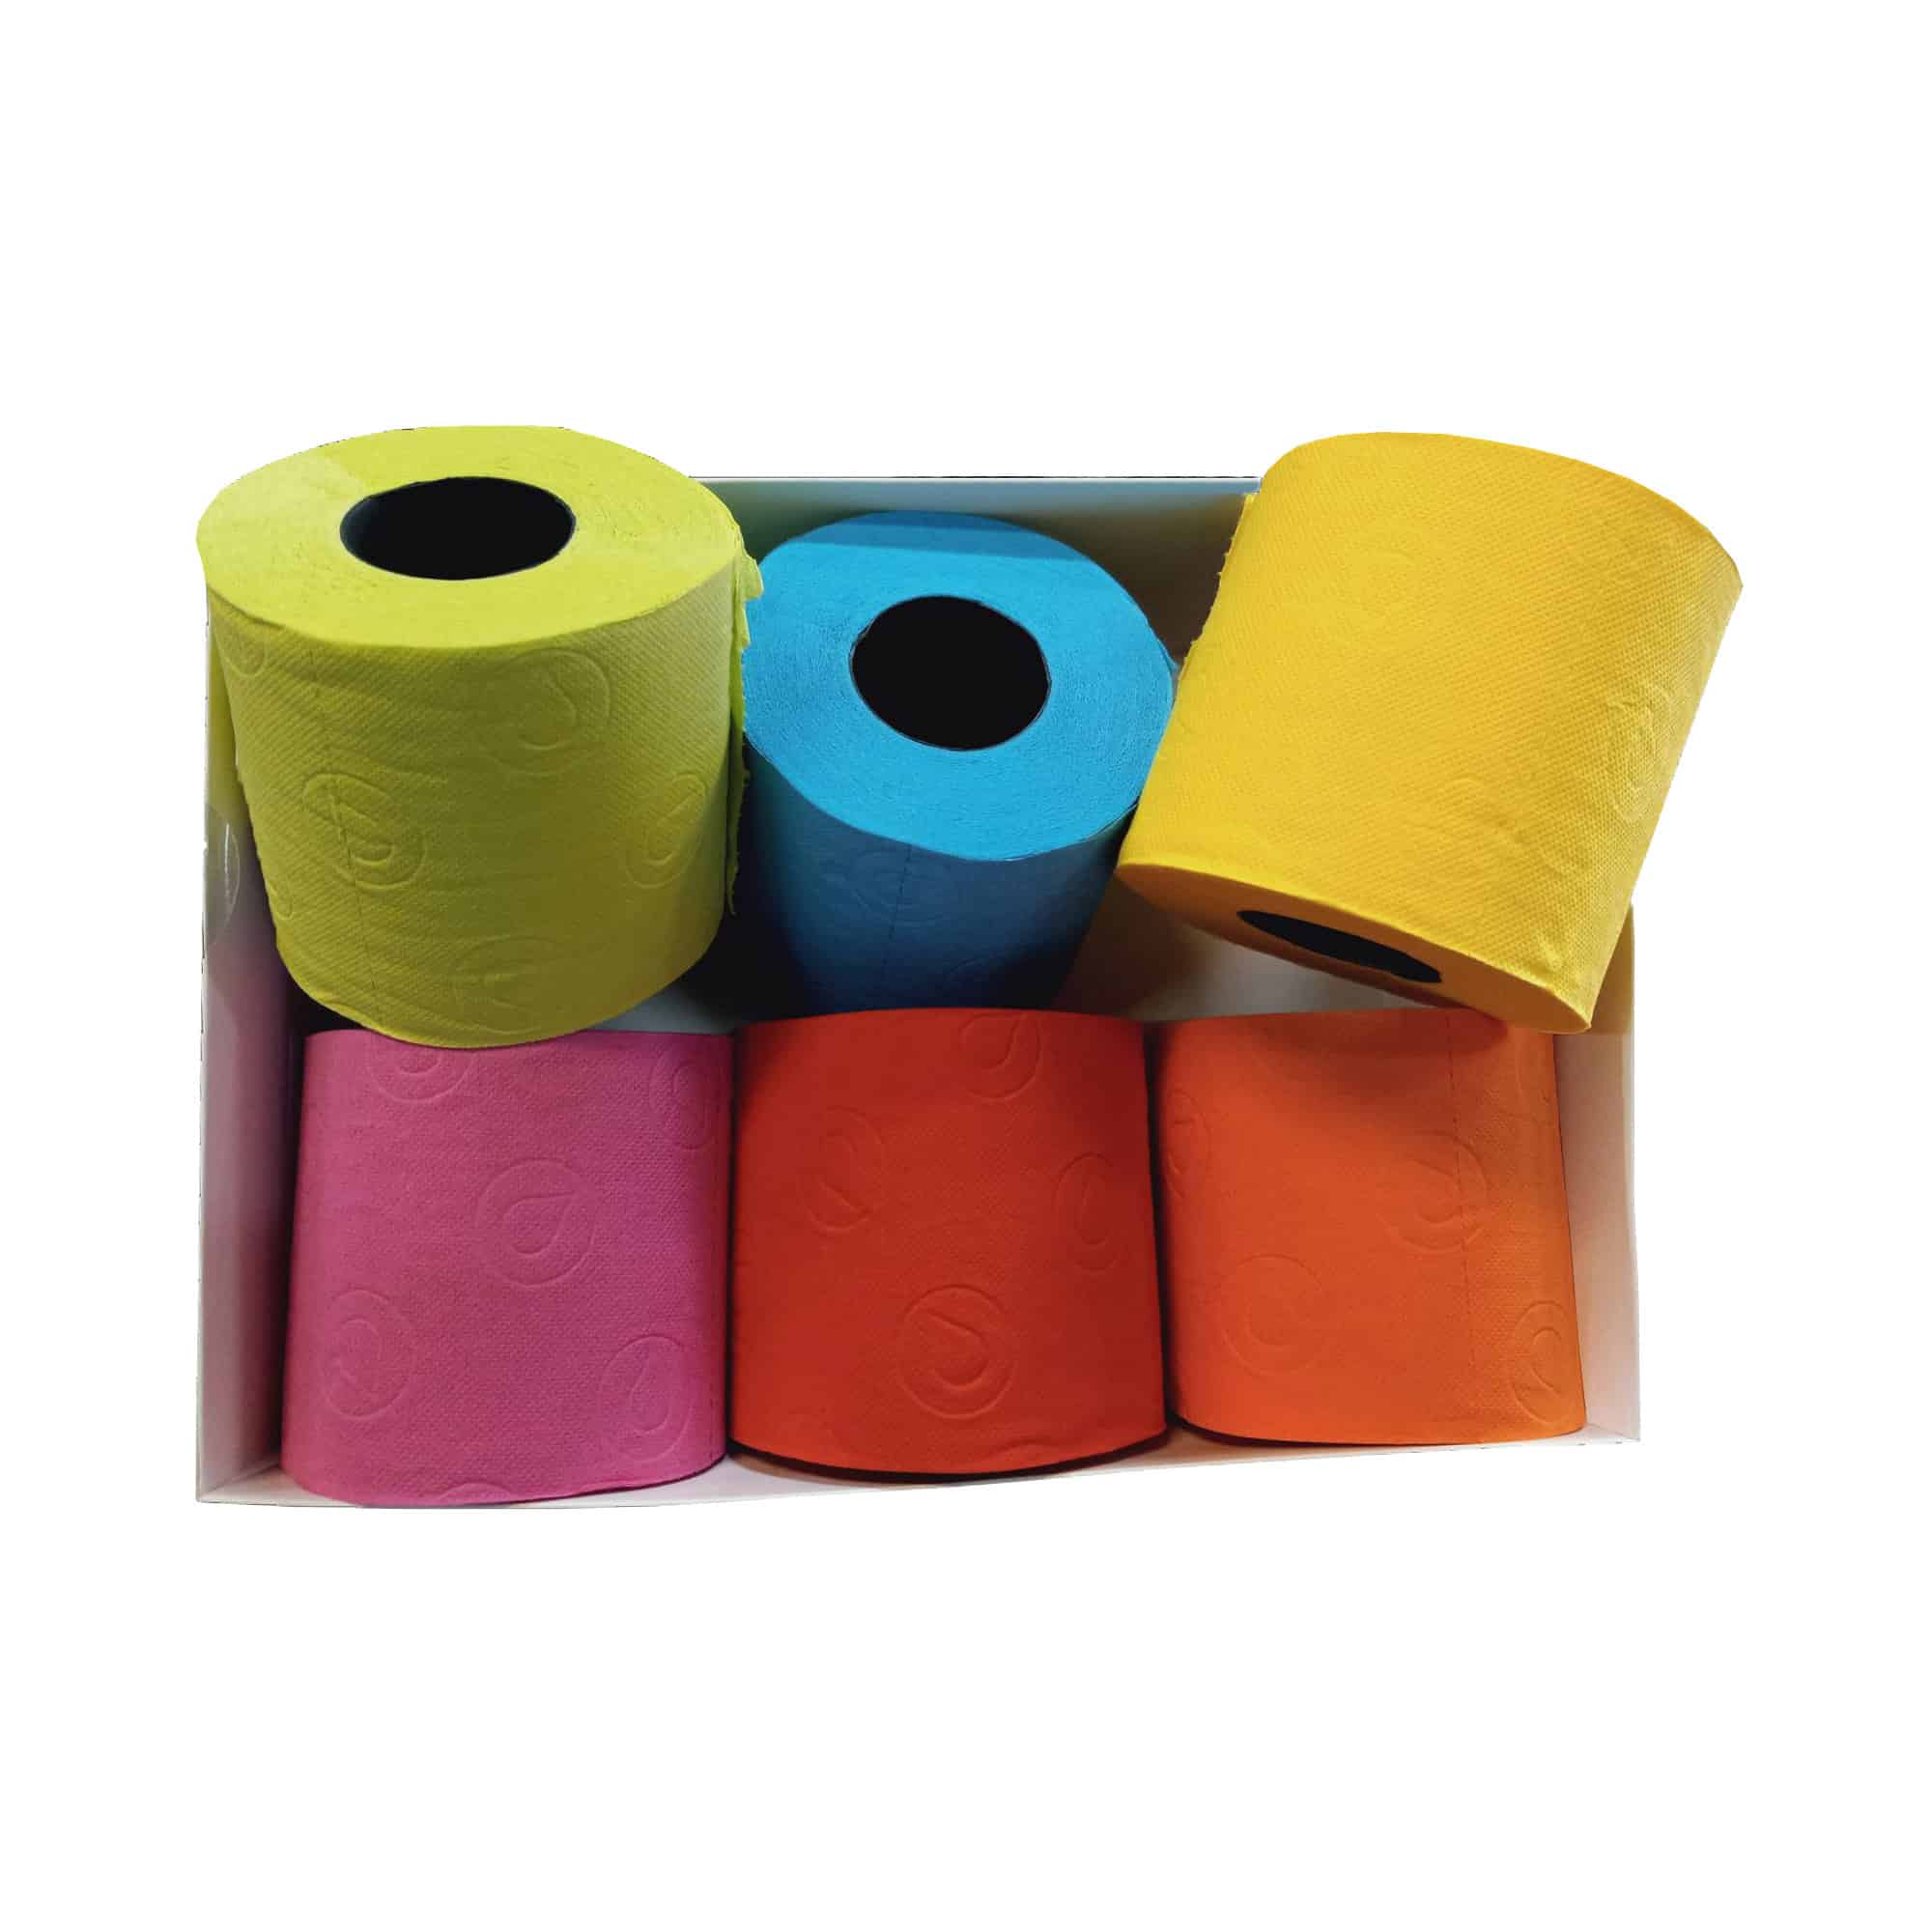  Renova Toilet Roll - Fucsia Paper (6 Roll Standard